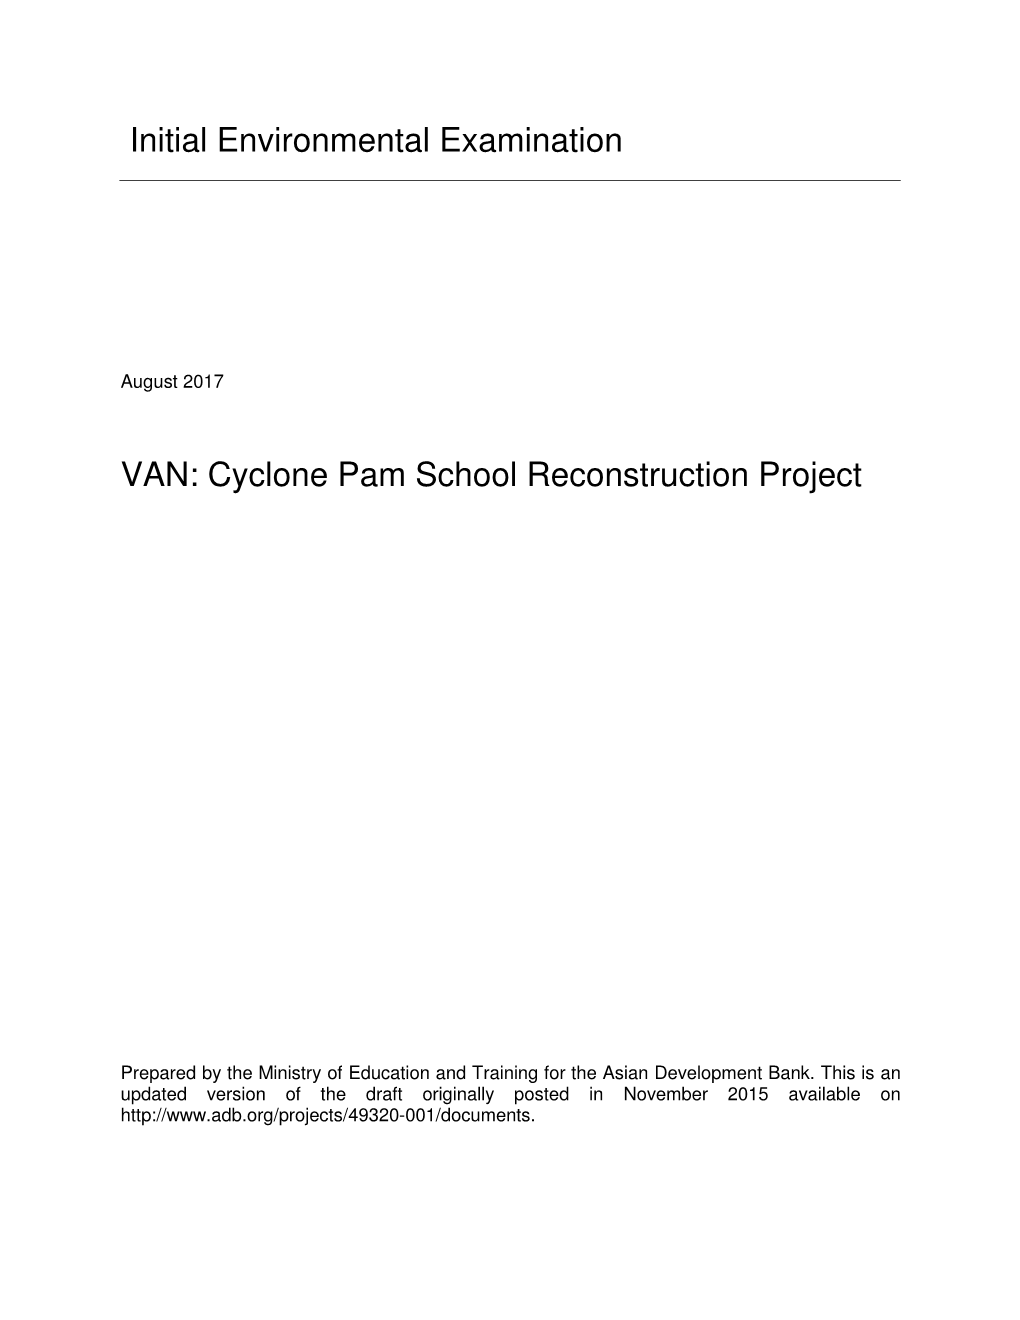 Initial Environmental Examination VAN: Cyclone Pam School